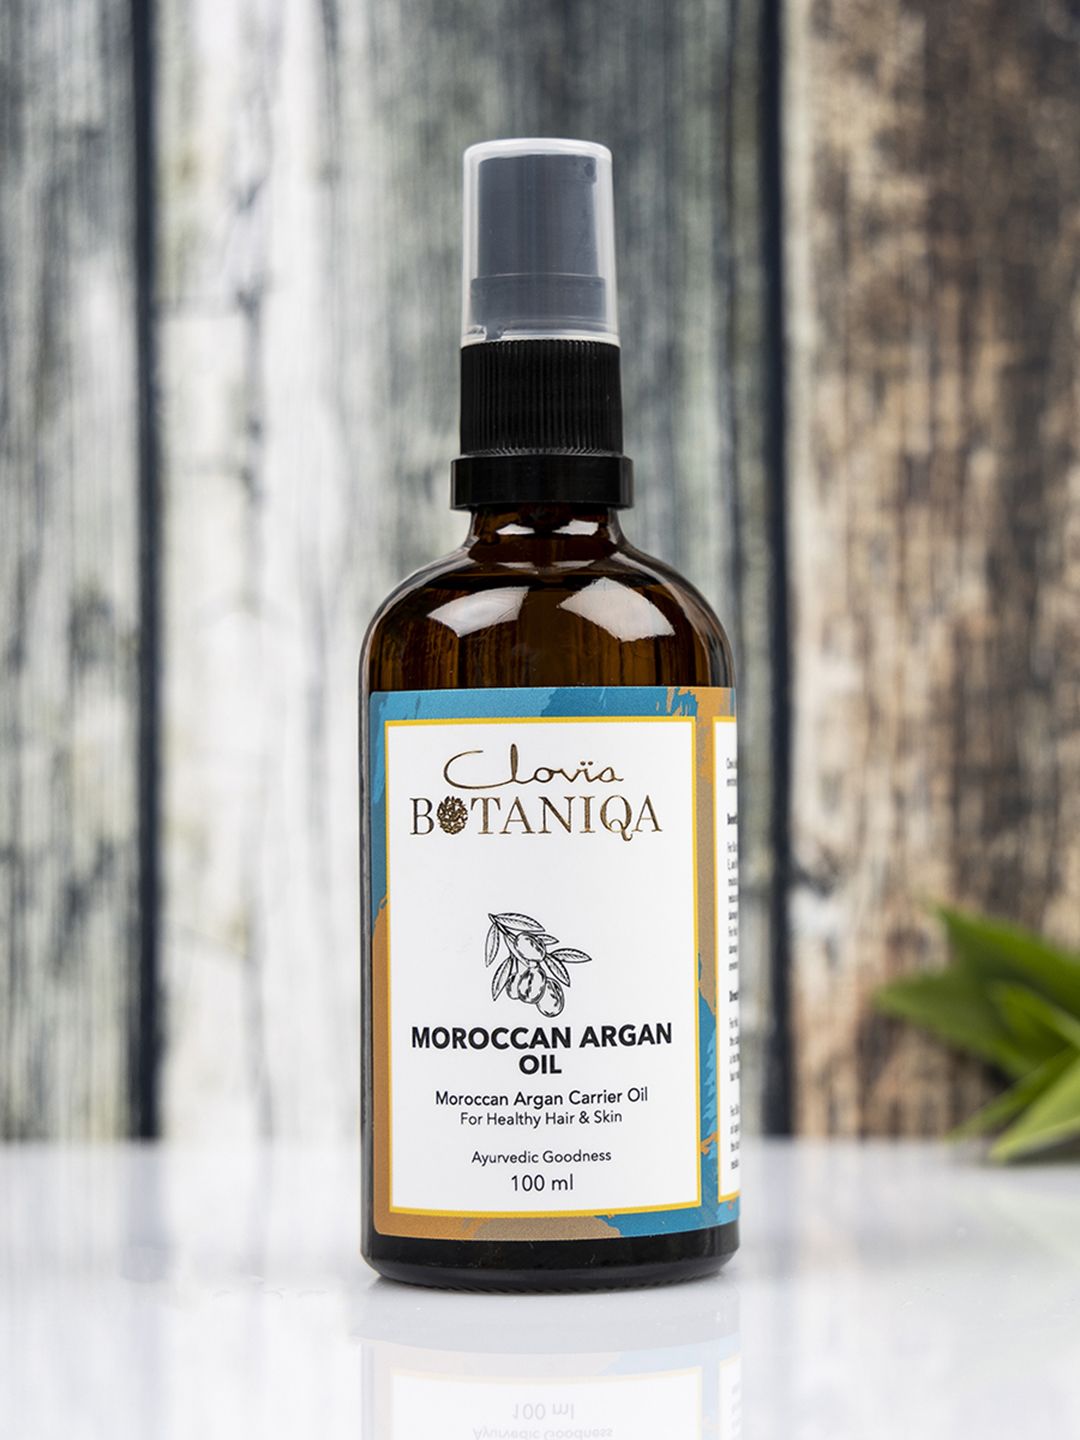 Clovia BOTANIQA Moroccan Argan Carrier Oil For Hair & Skin -100ml Price in India